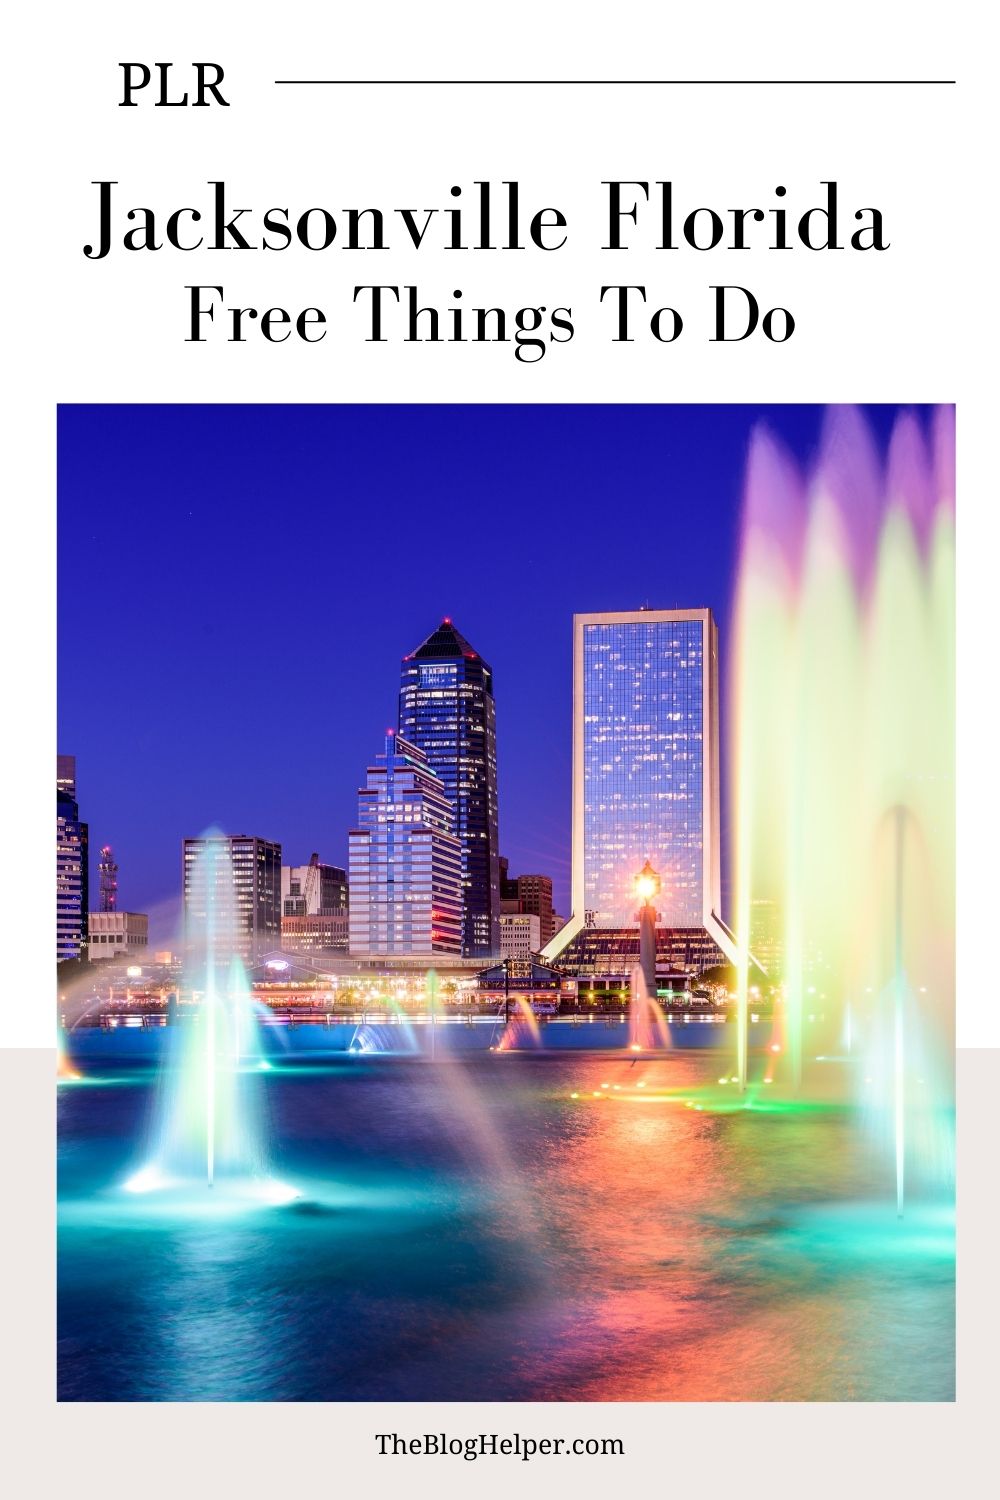 Jacksonville Florida – Free Things To Do PLR #plr #florida